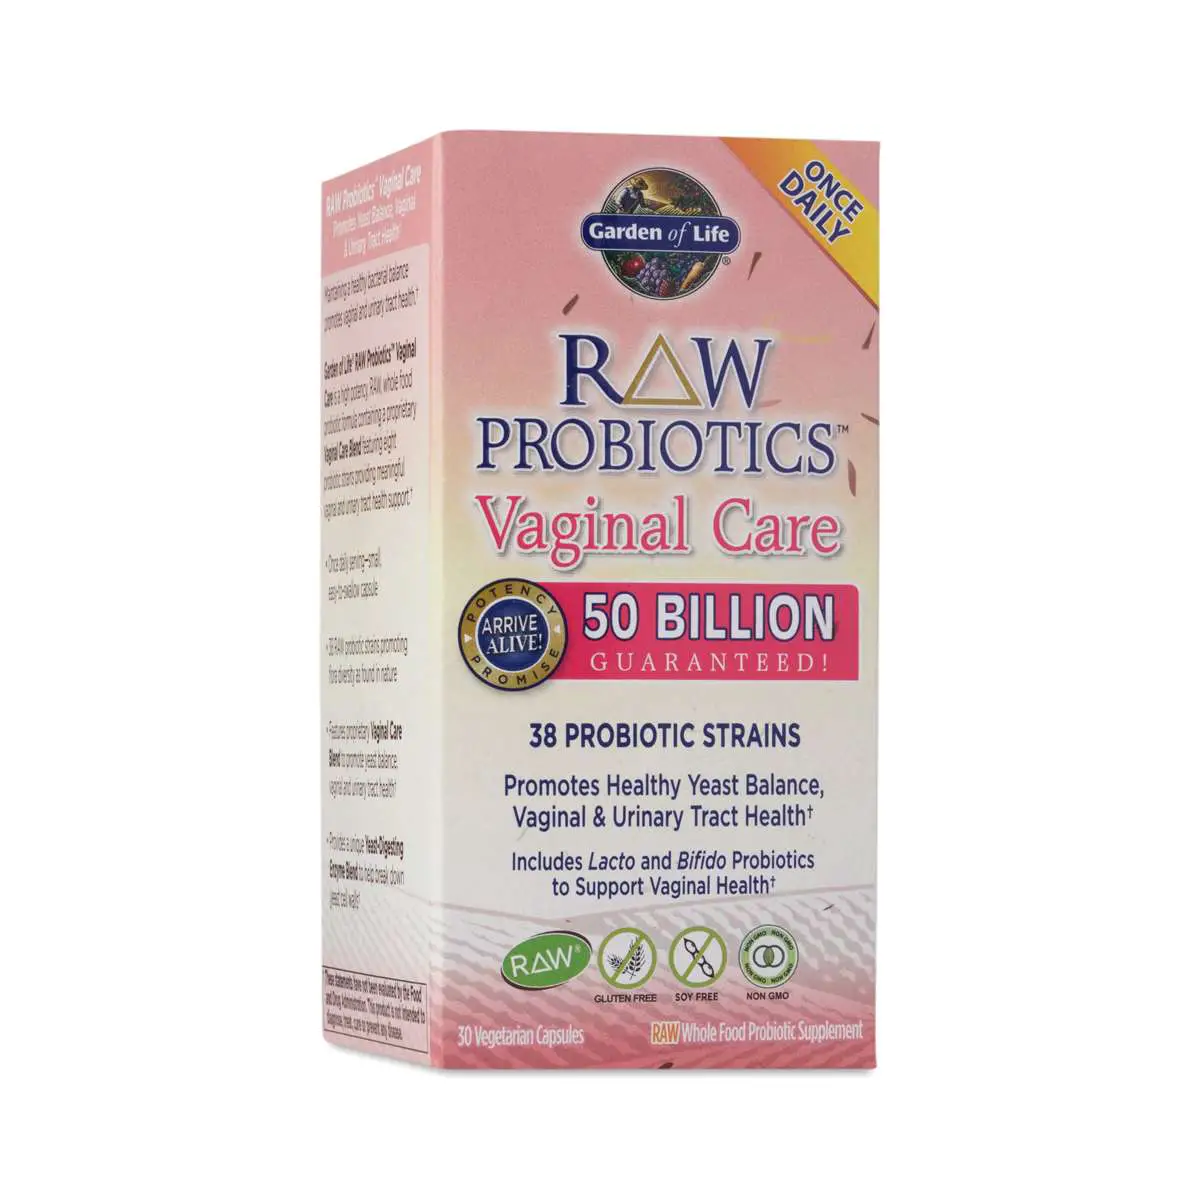 Raw Probiotics Vaginal Care by Garden of Life